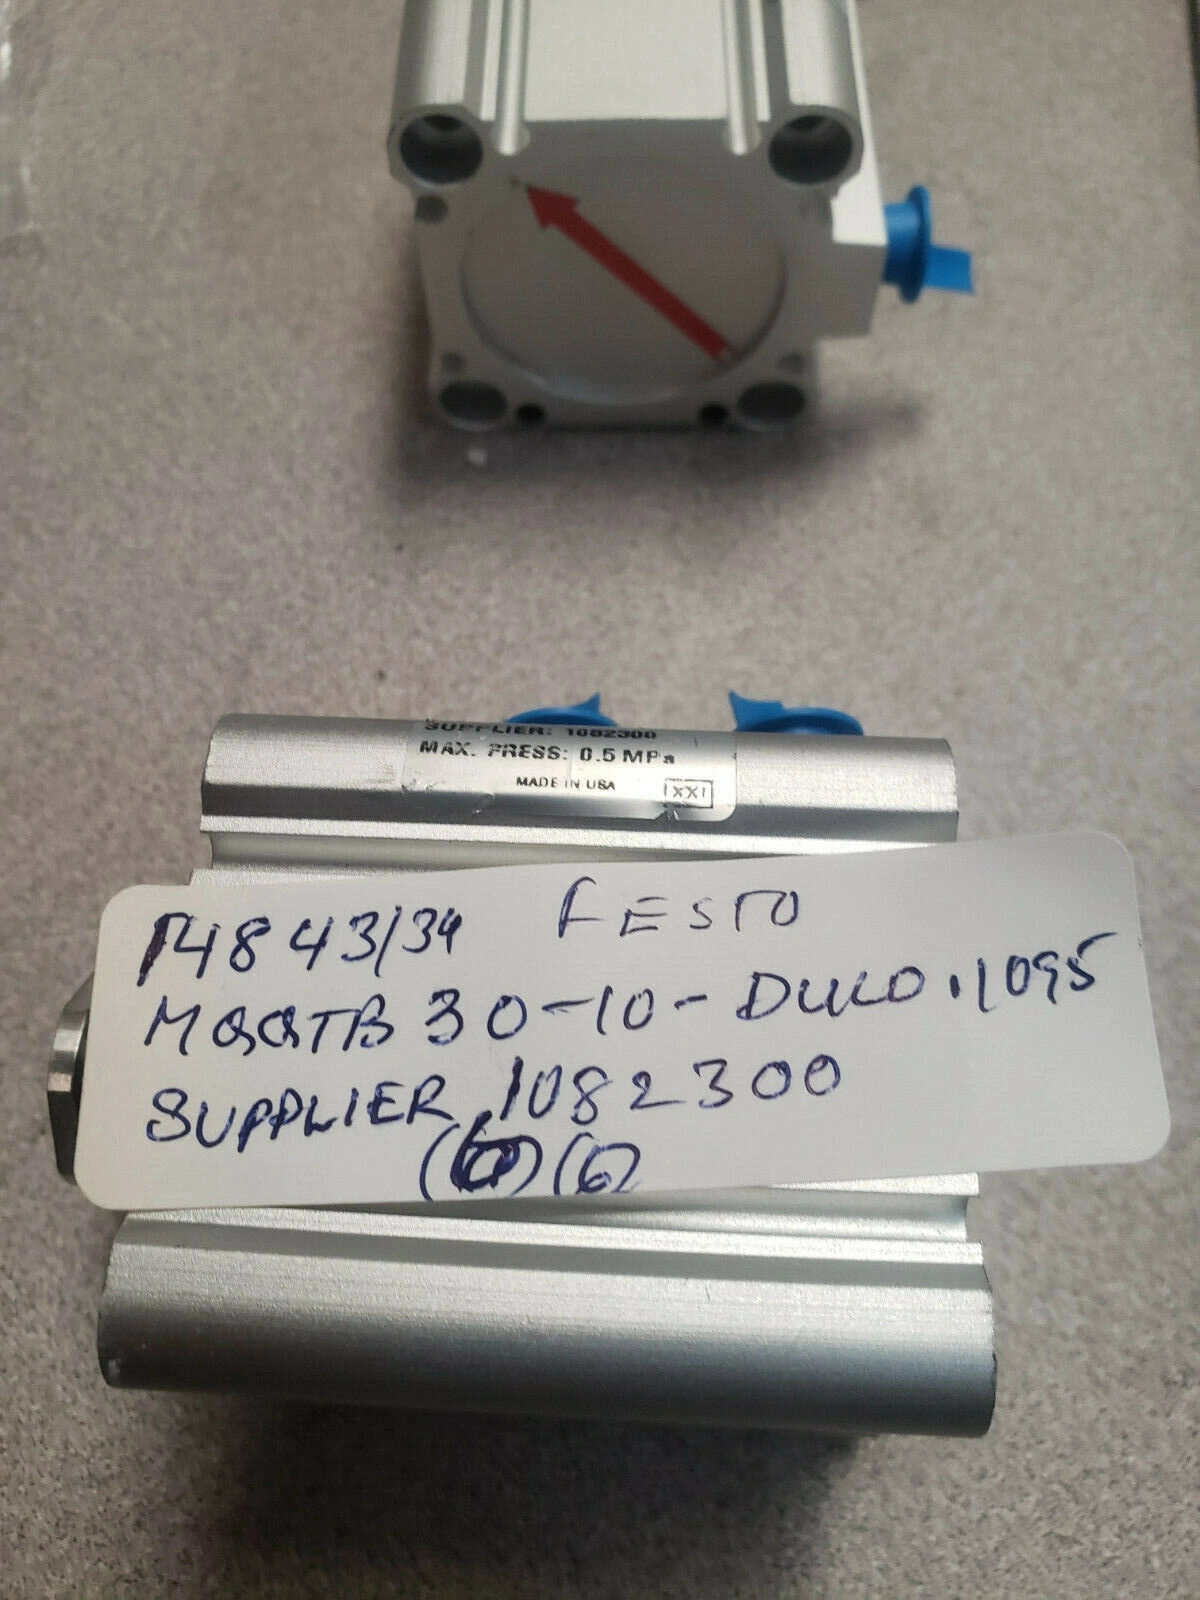 SMC MQQTB30-10-DULO-1075 Metal Seal DUL0- 1075 MET